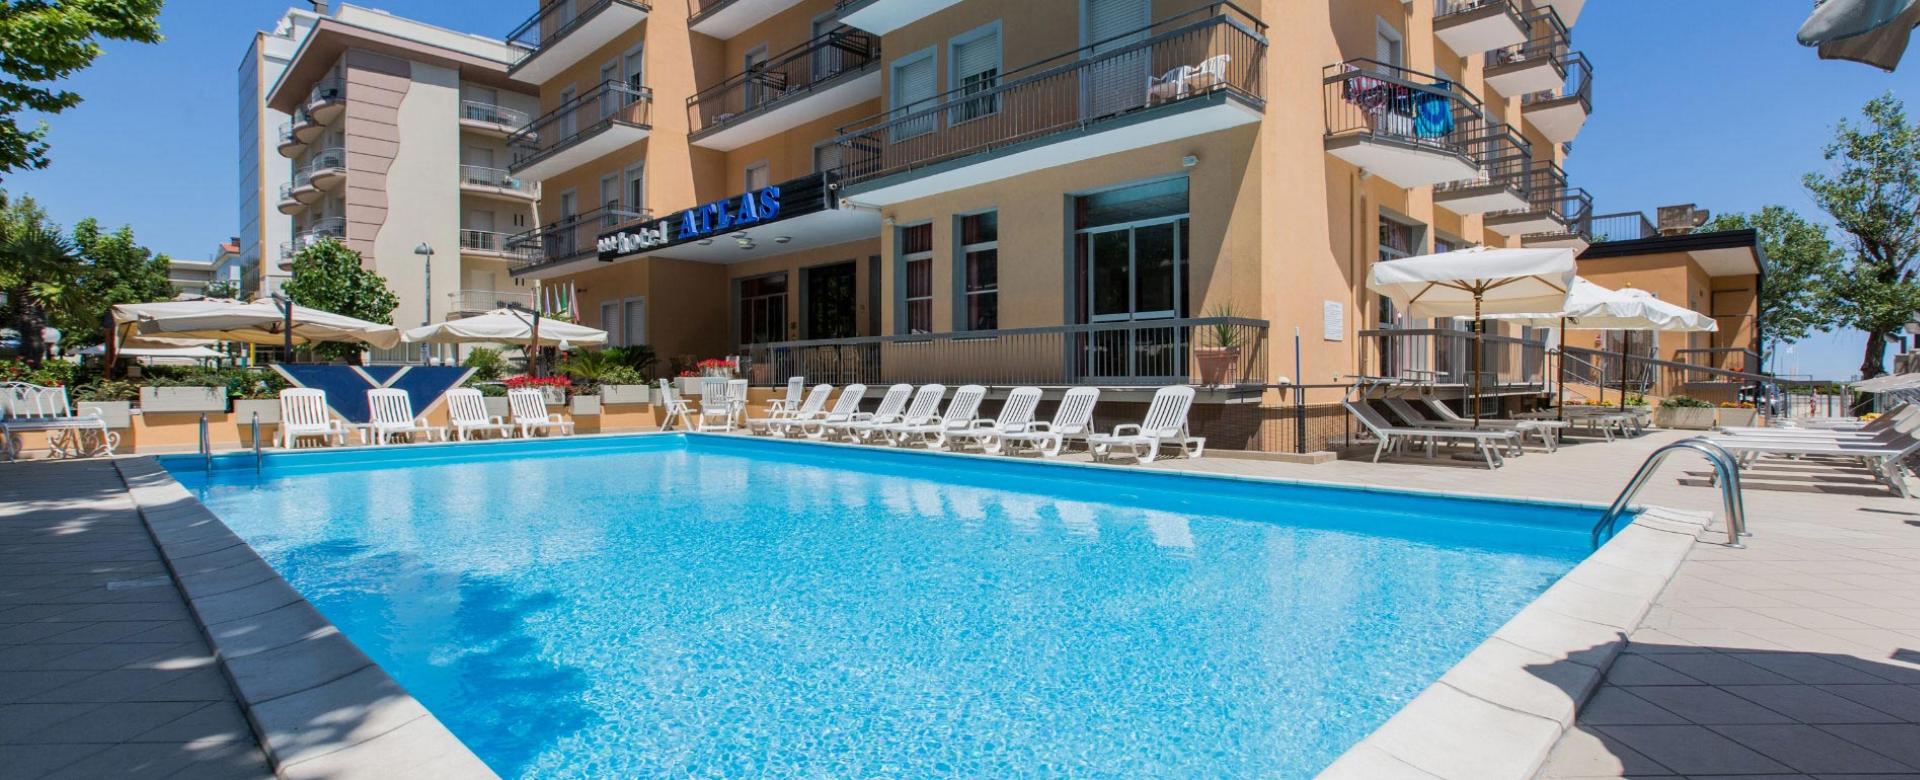 hotelatlasrimini it 5-piscina-hotel-atlas-1000x681 012